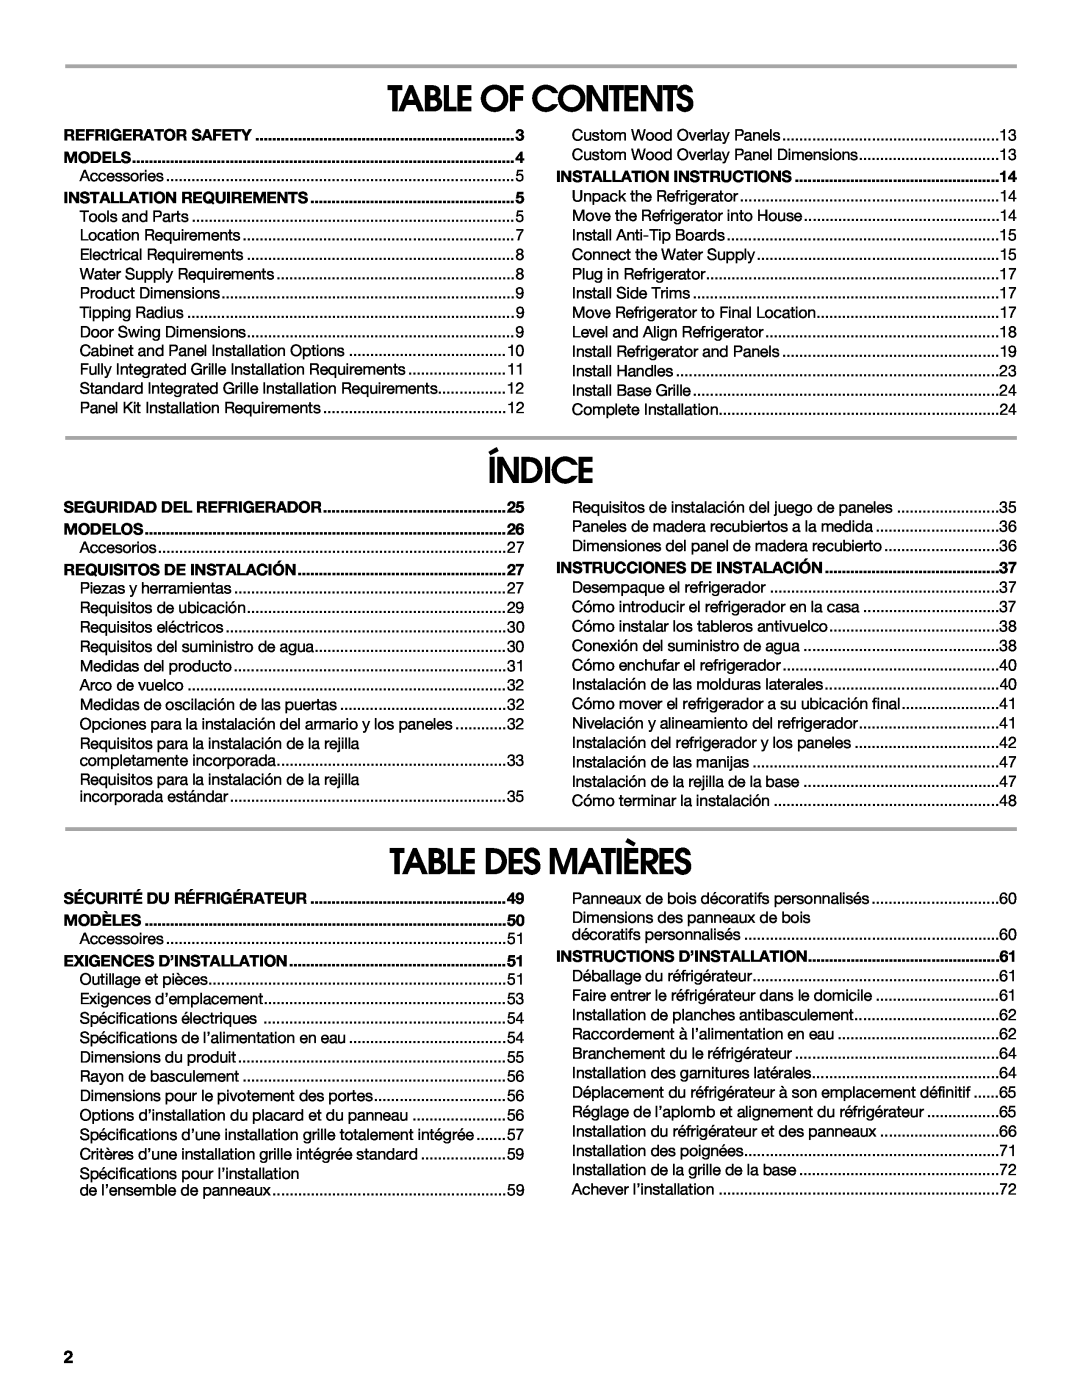 Jenn-Air W10379136B manual Table Of Contents, Índice, Table Des Matières 